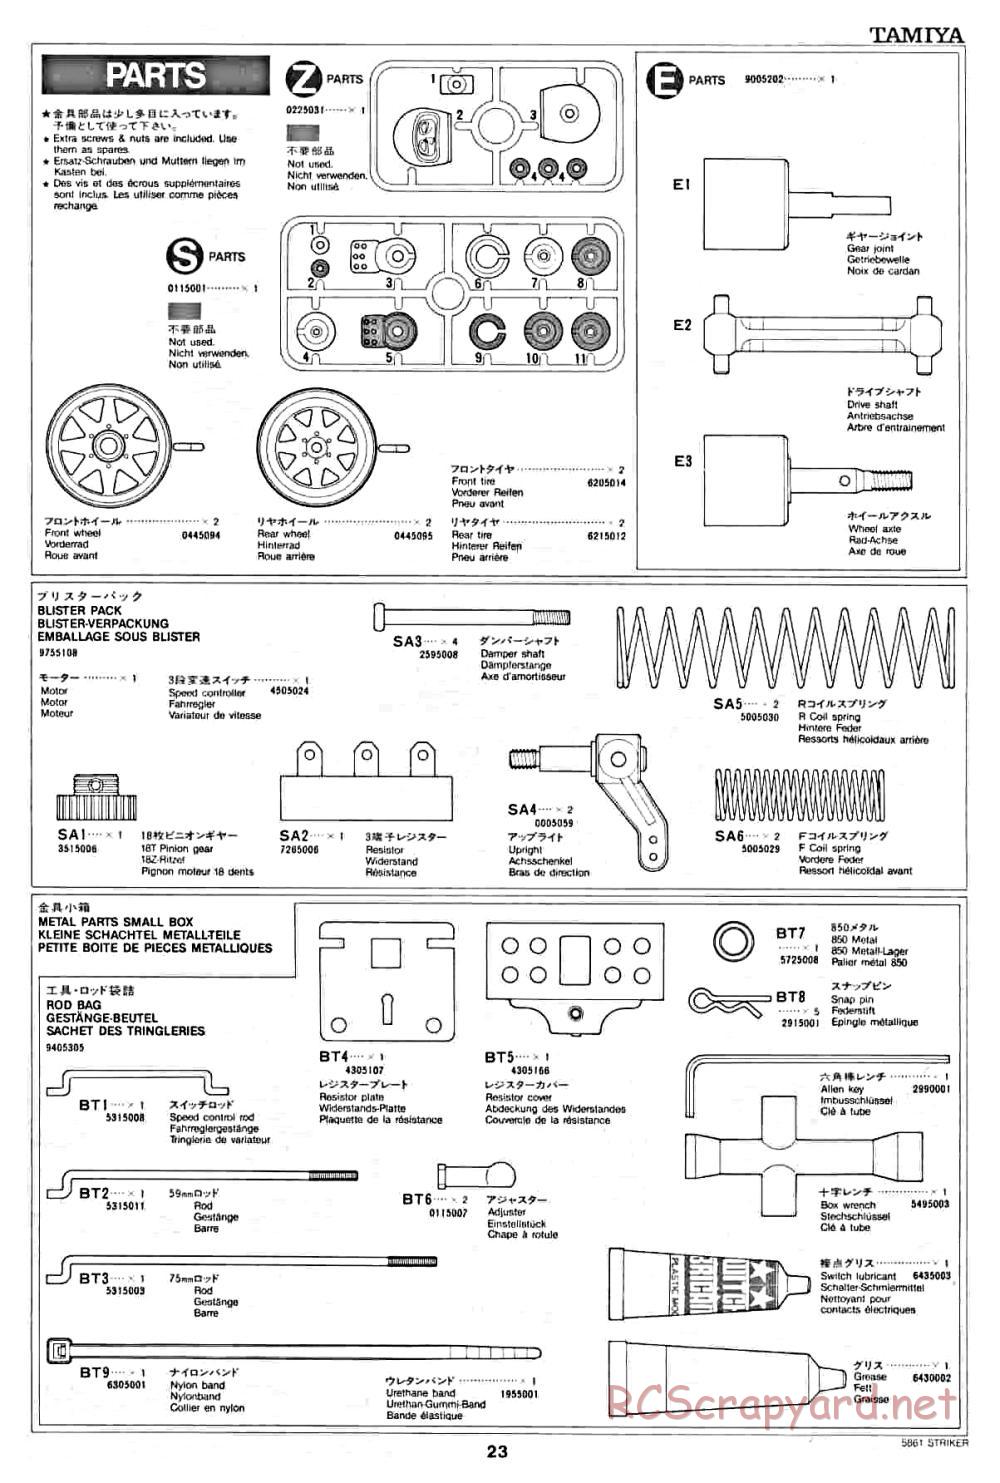 Tamiya - Striker - 58061 - Manual - Page 23